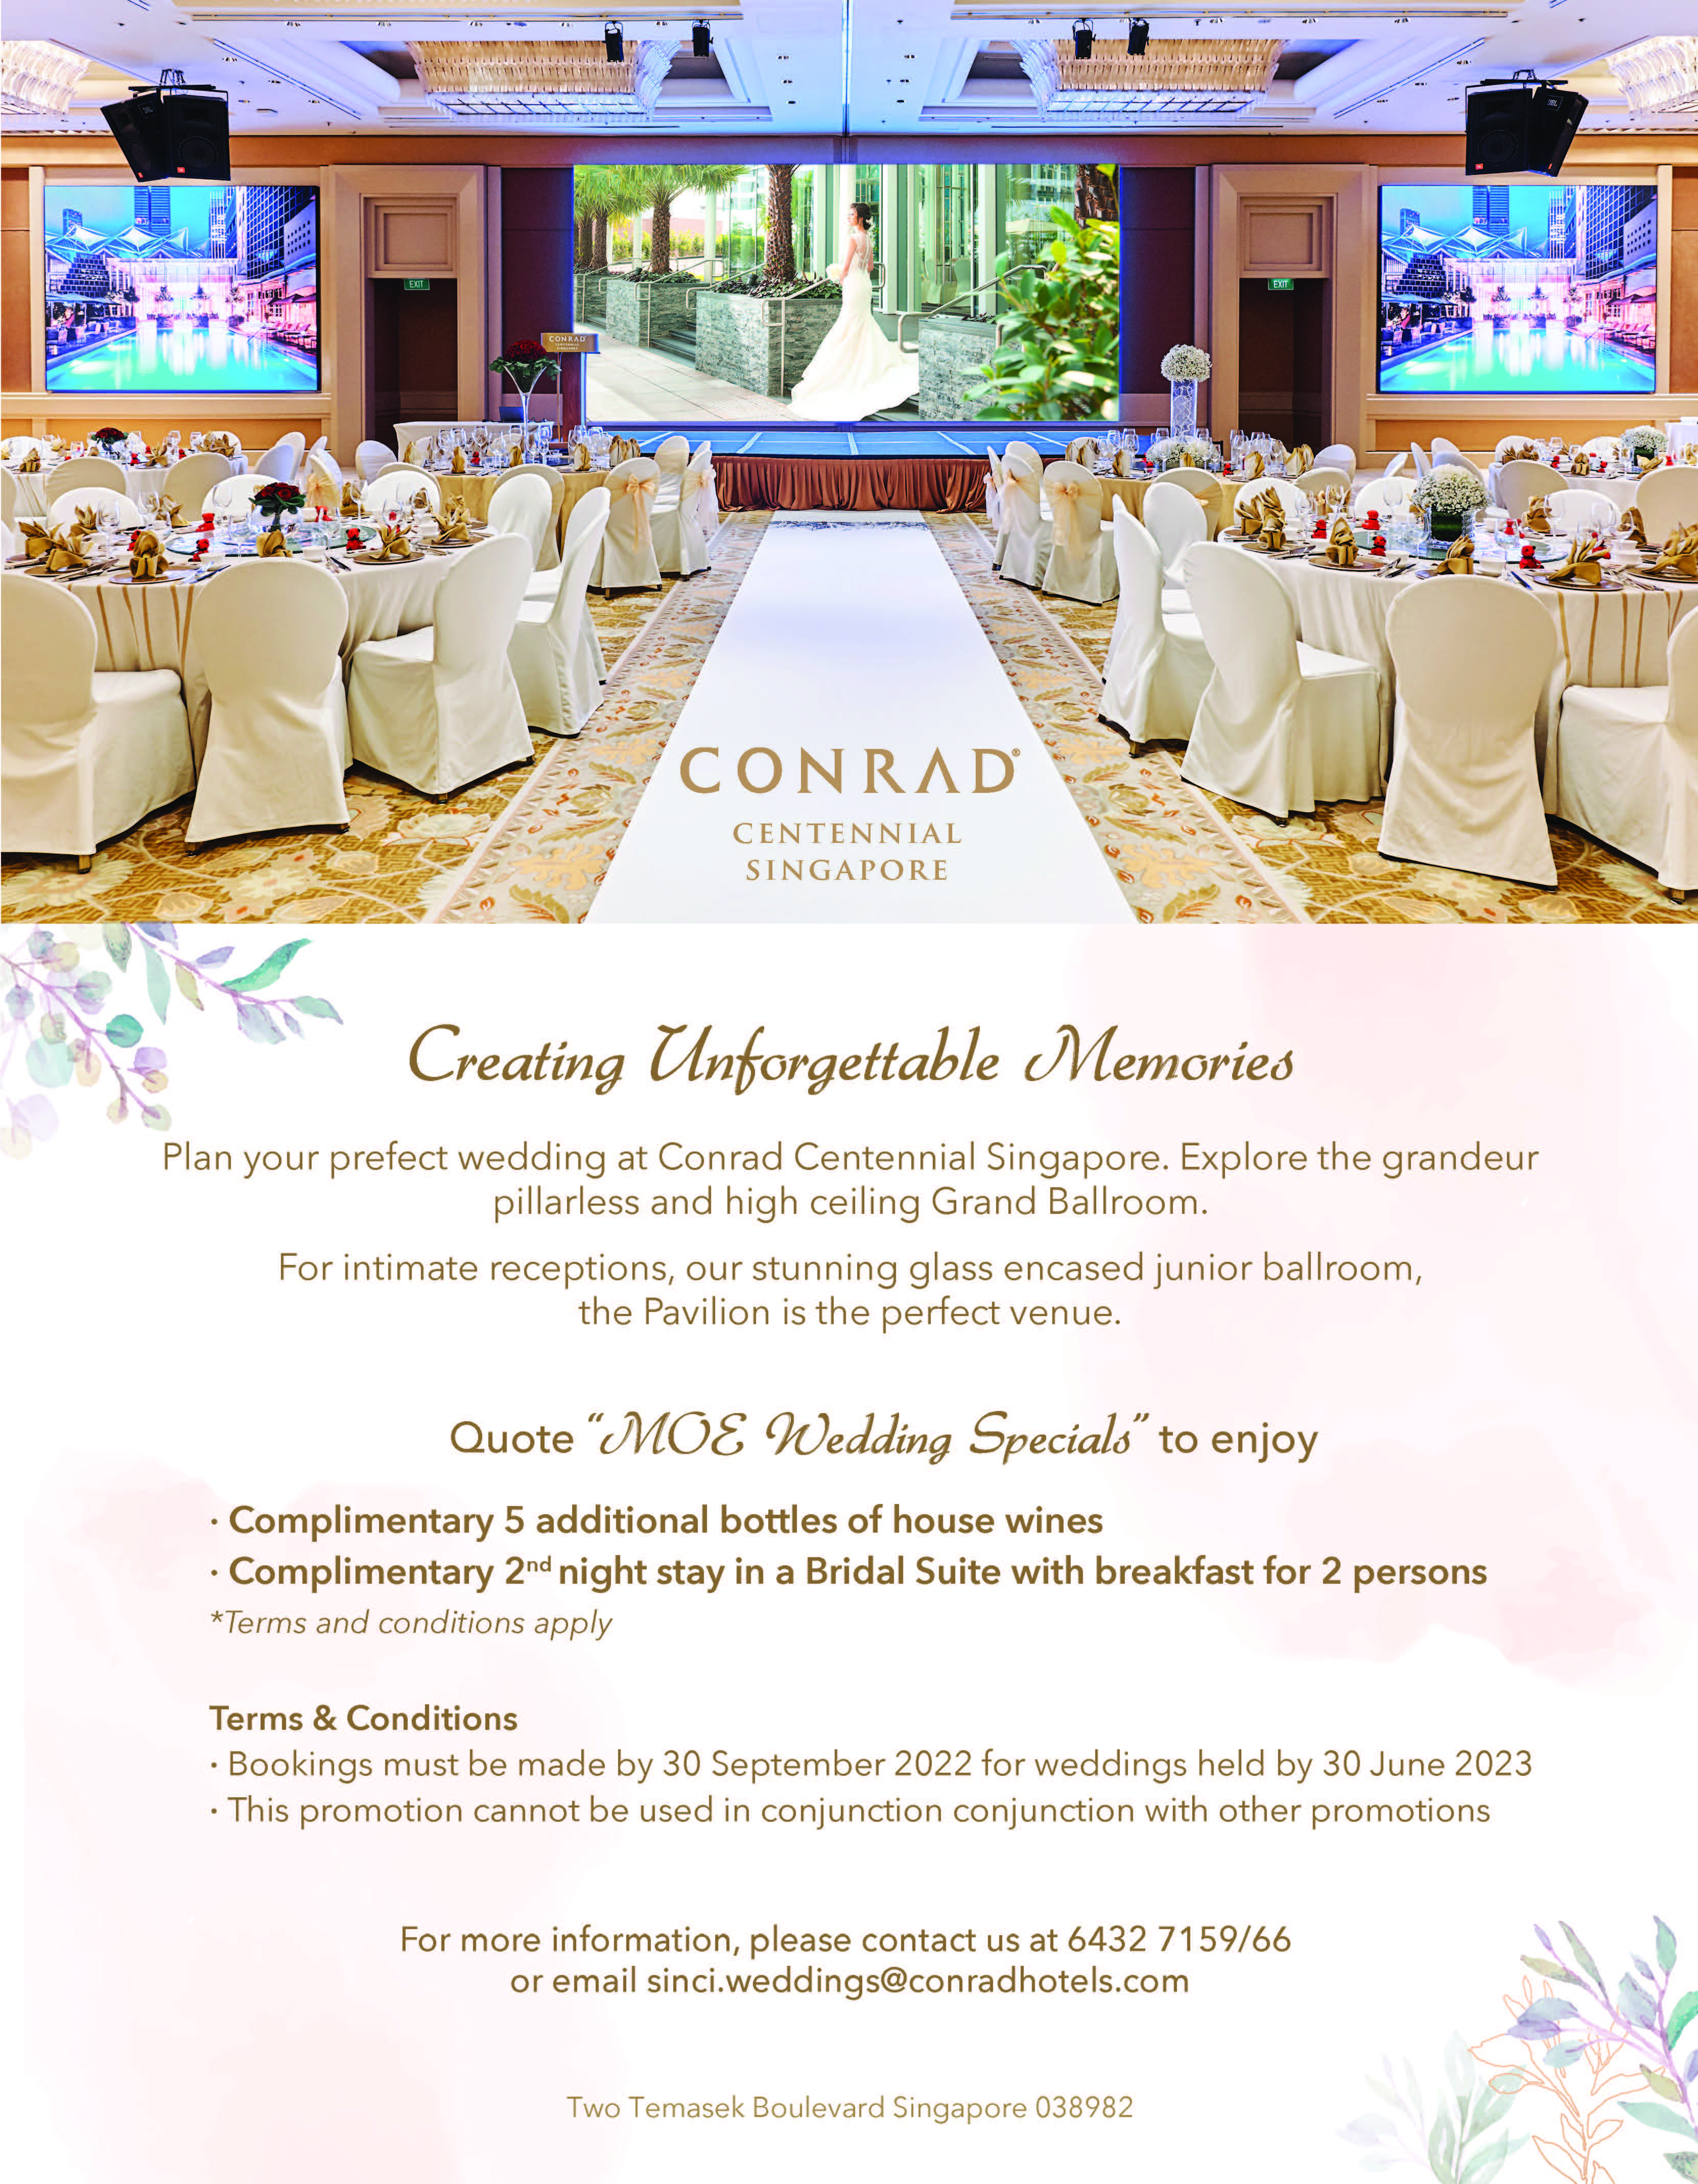 Conrad Centennial Singapore Wedding Promotions Ministry of